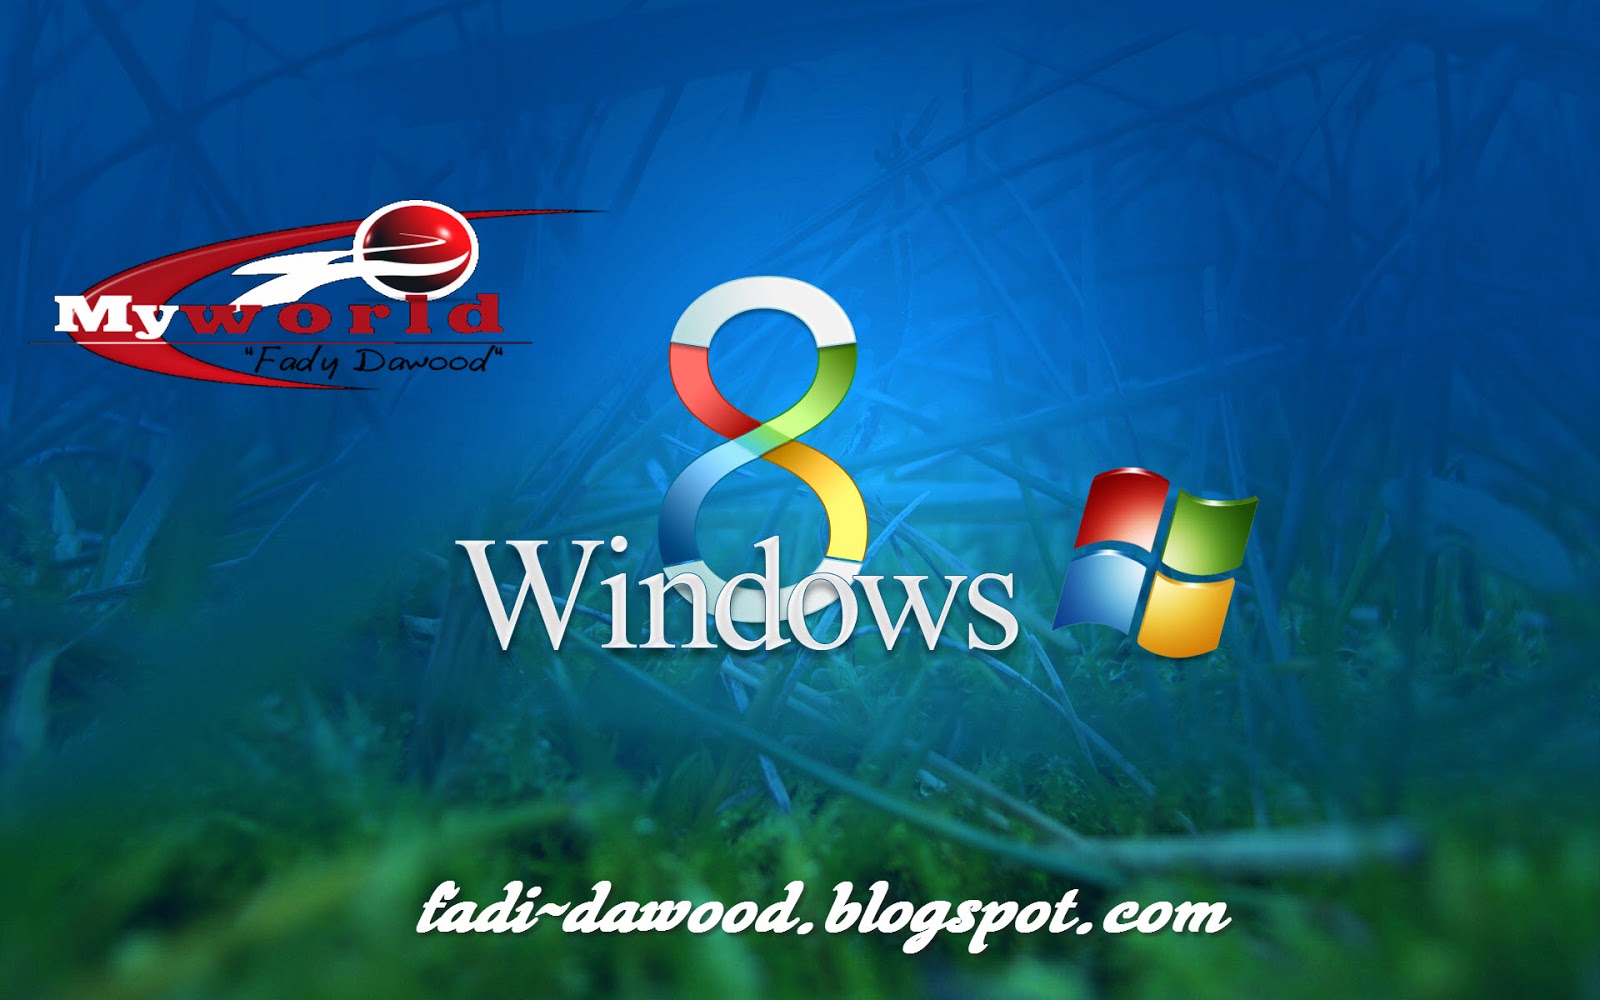 free-windows-wallpaper-hot-windows-7-seven-desktop-wallpapers-blue-hd ...